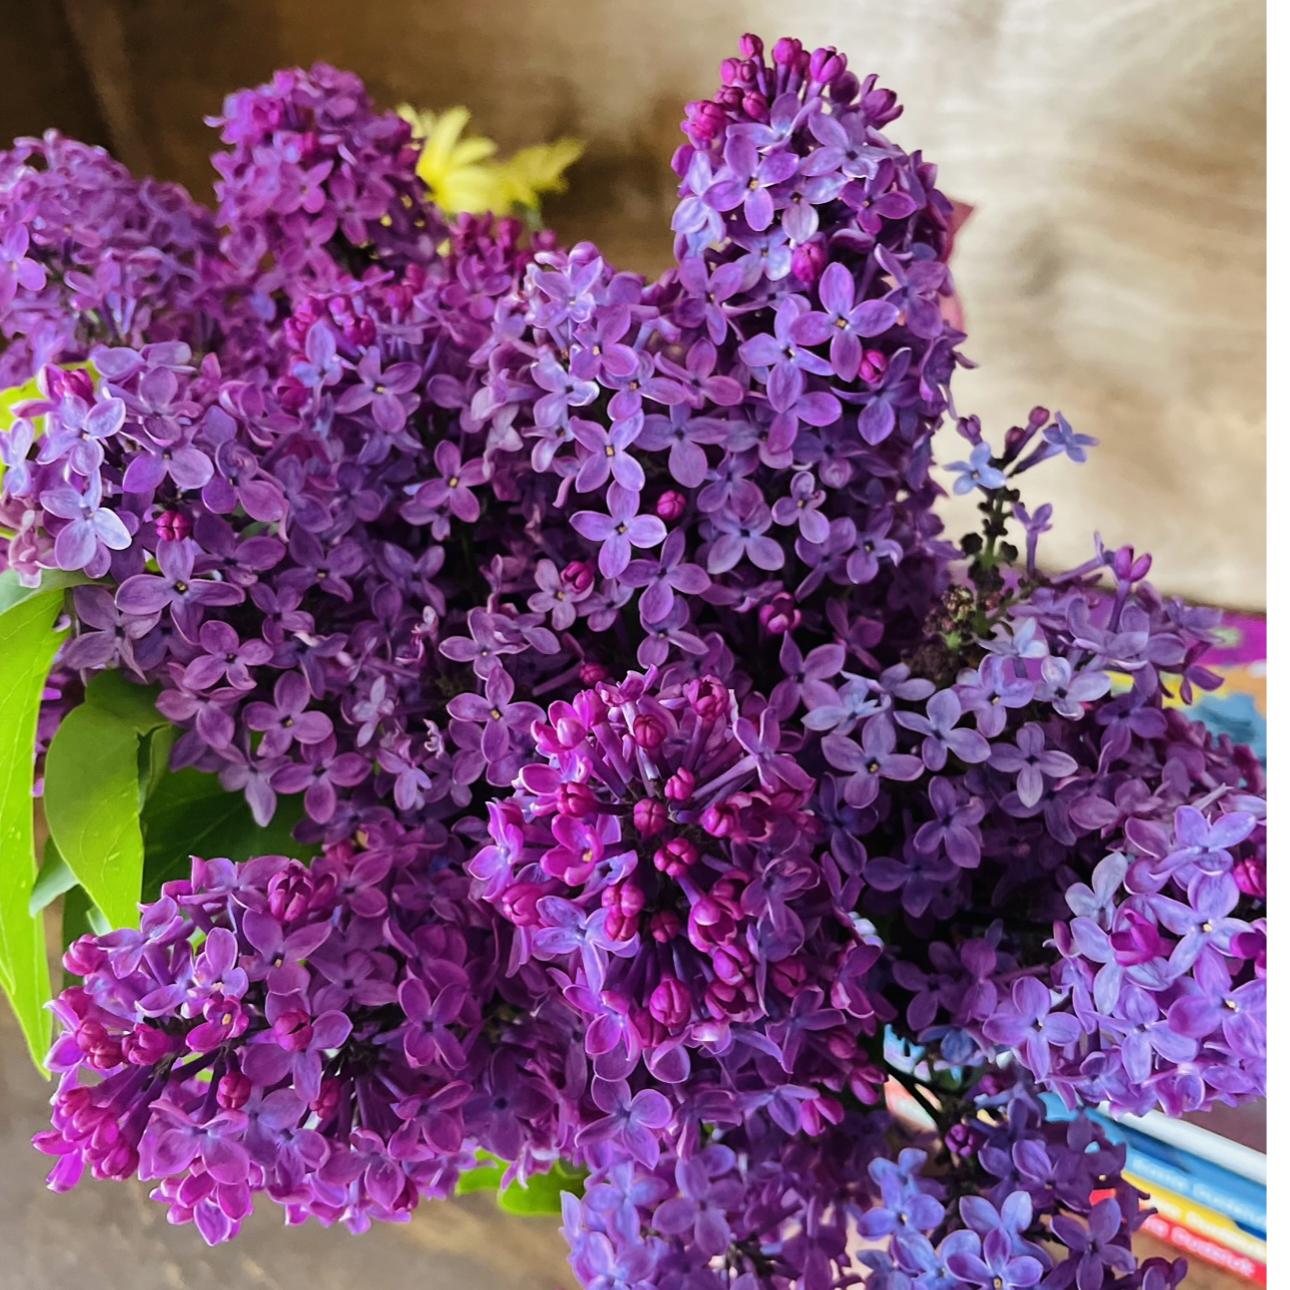 Lillac&lavender's images